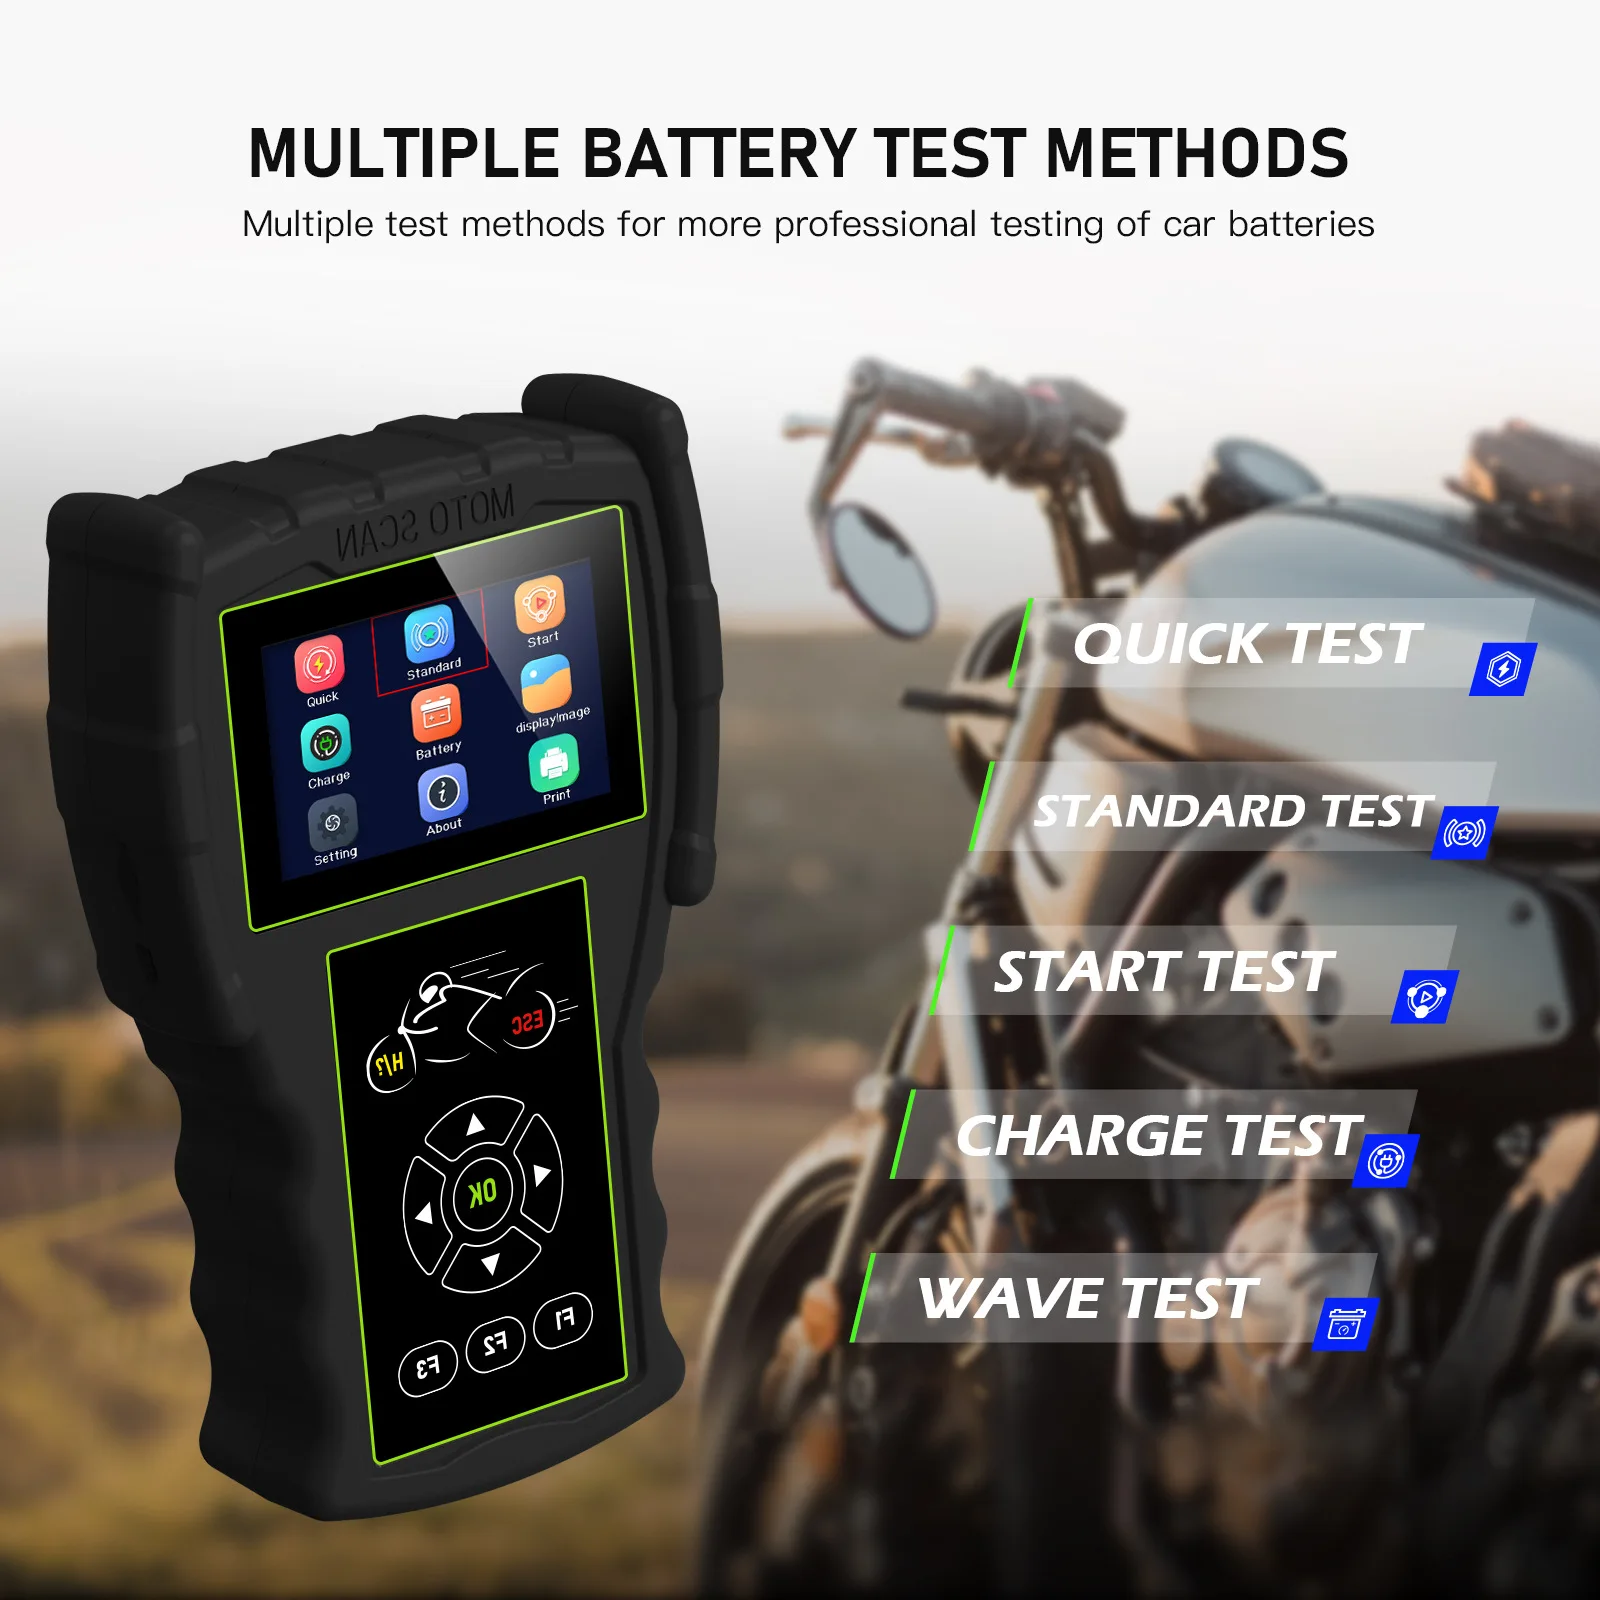 

Motorcycle Diagnostic Scanner Jdiag M100 Pro 2in1 Motorbike OBD Scan Tool Battery Tester